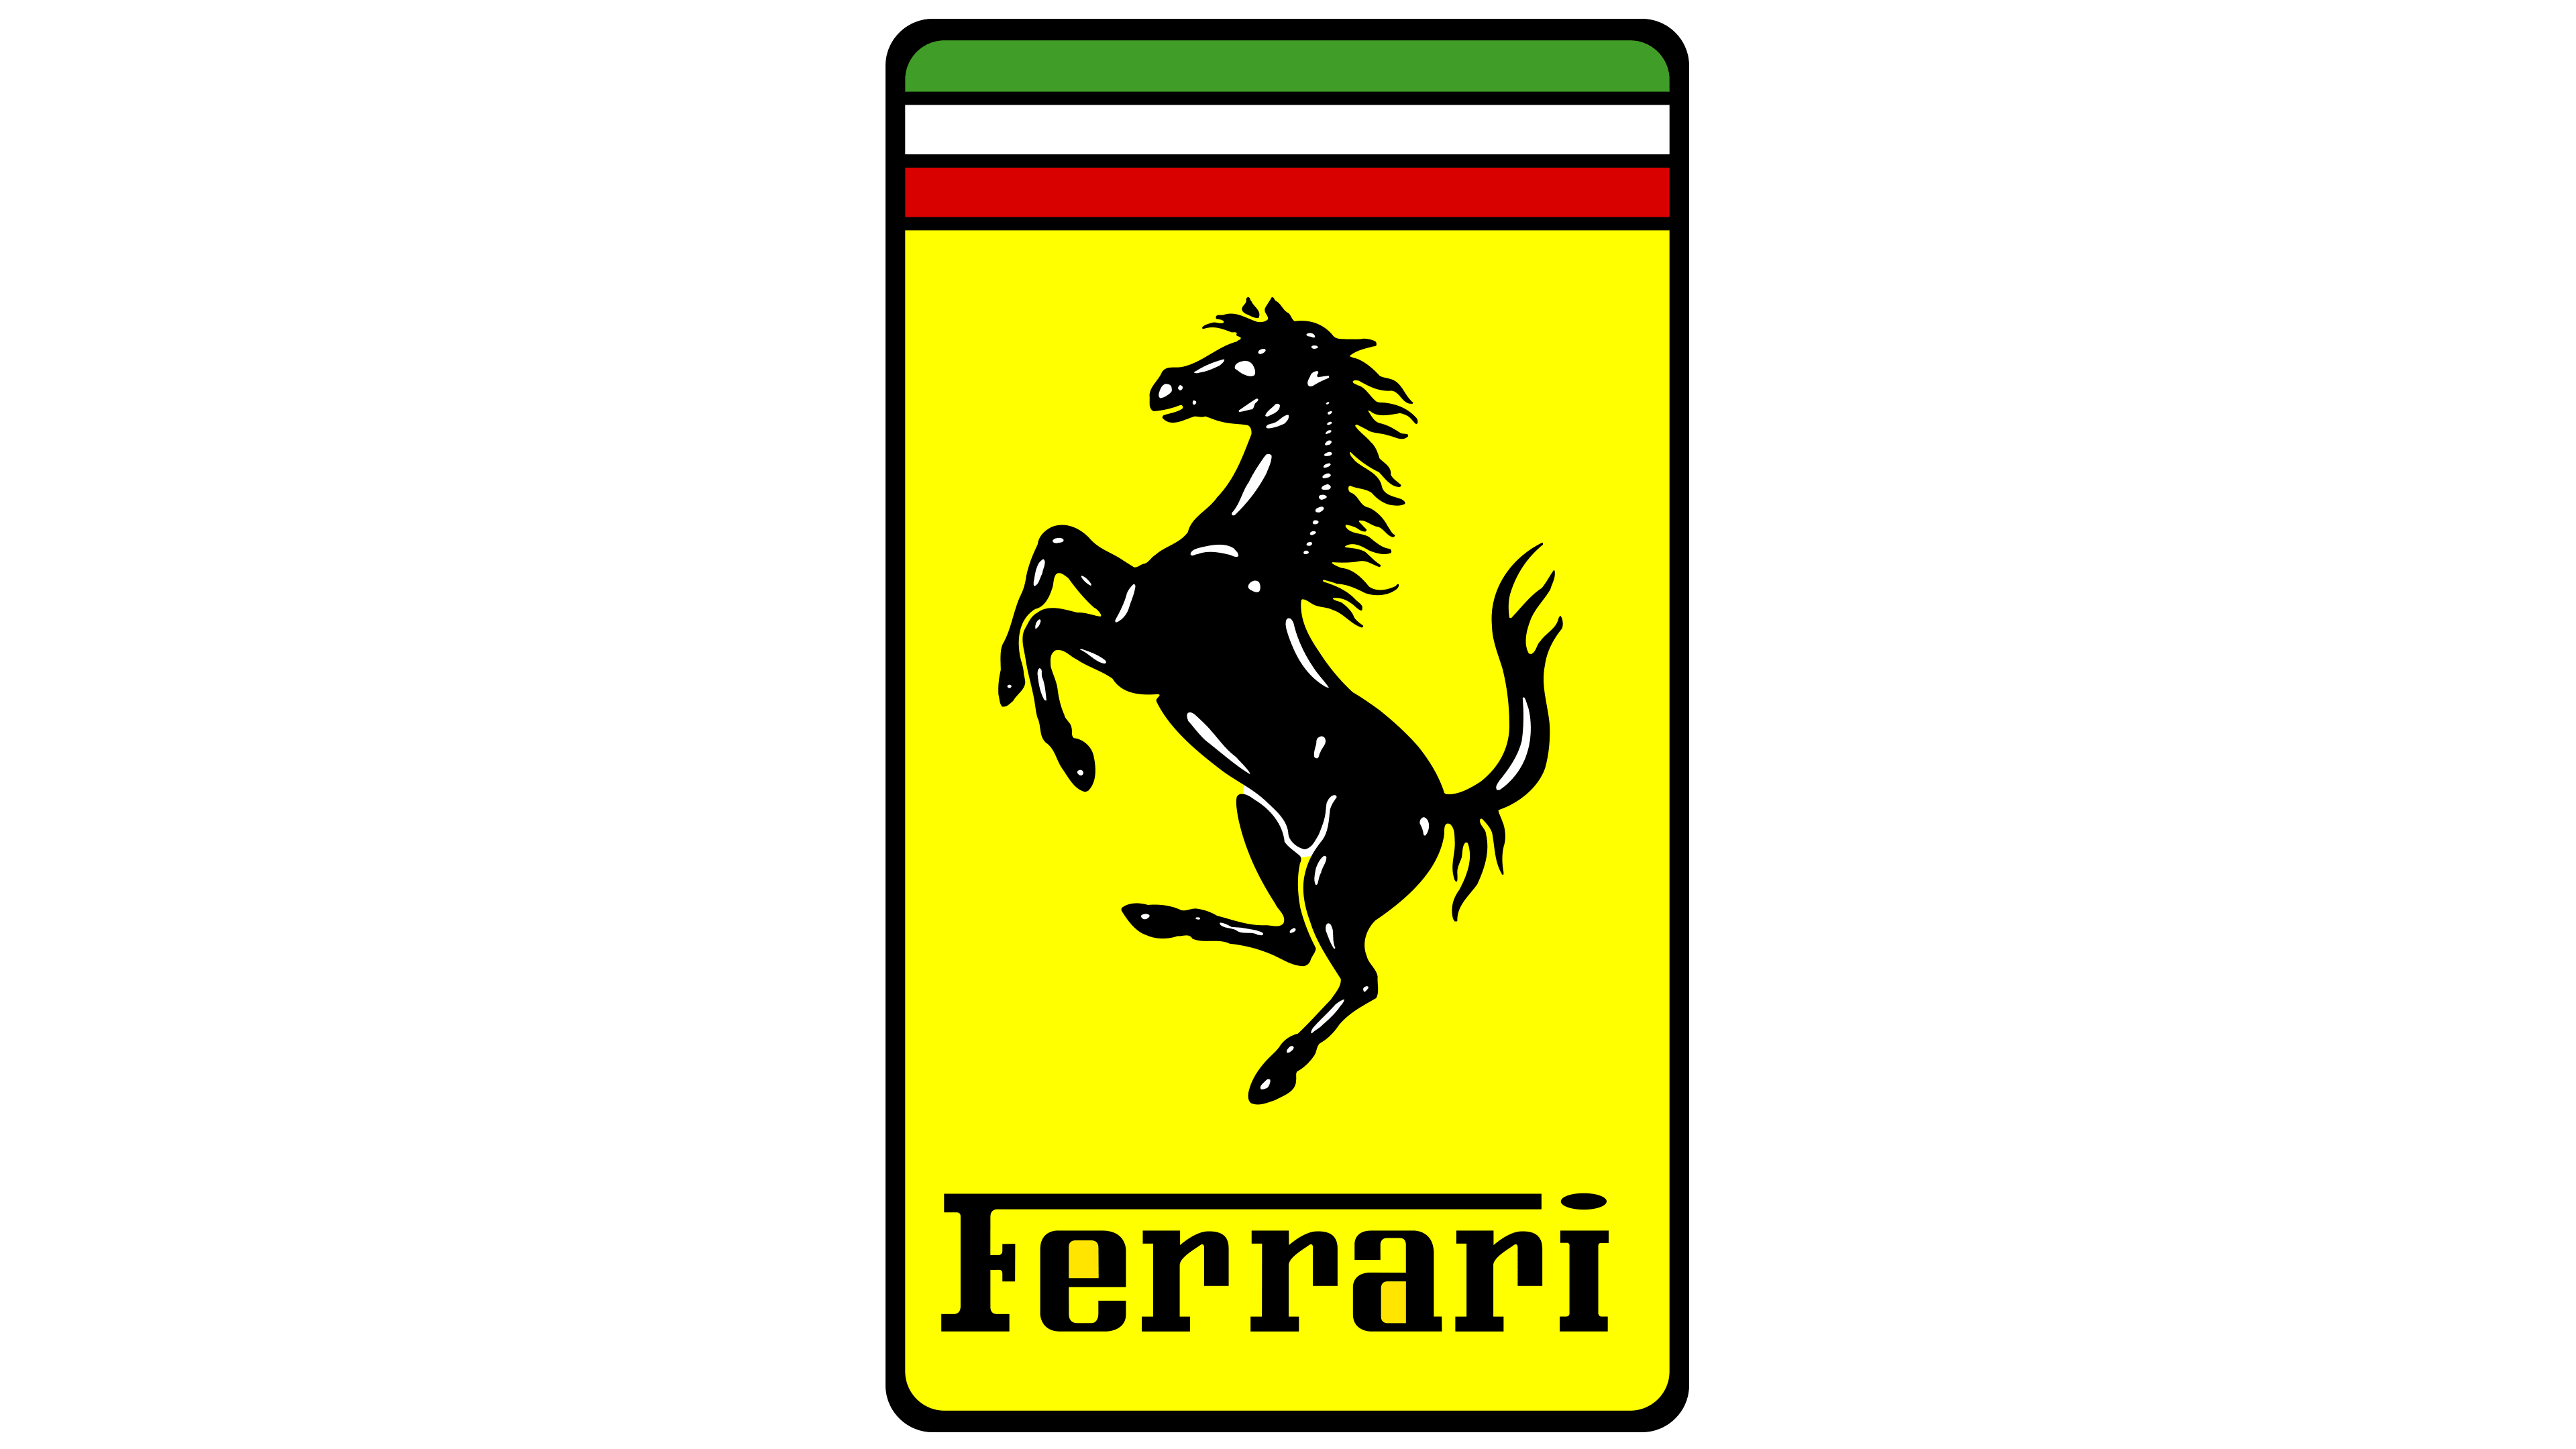 Ferrari logo PNG фото